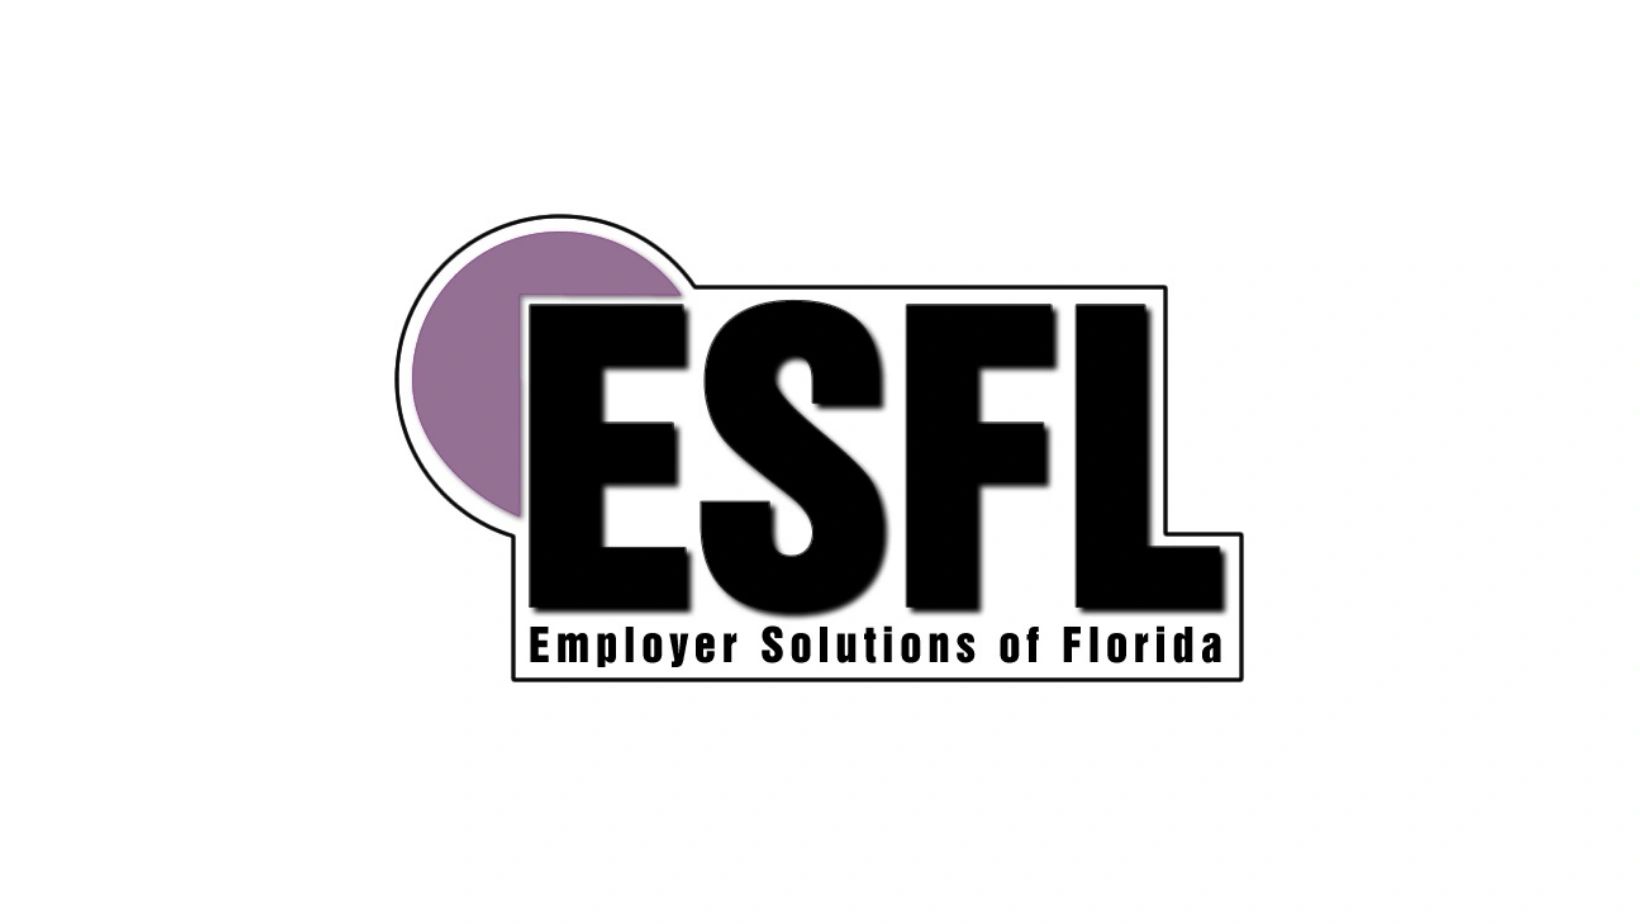 Employer Solutions of Florida (ESFL)